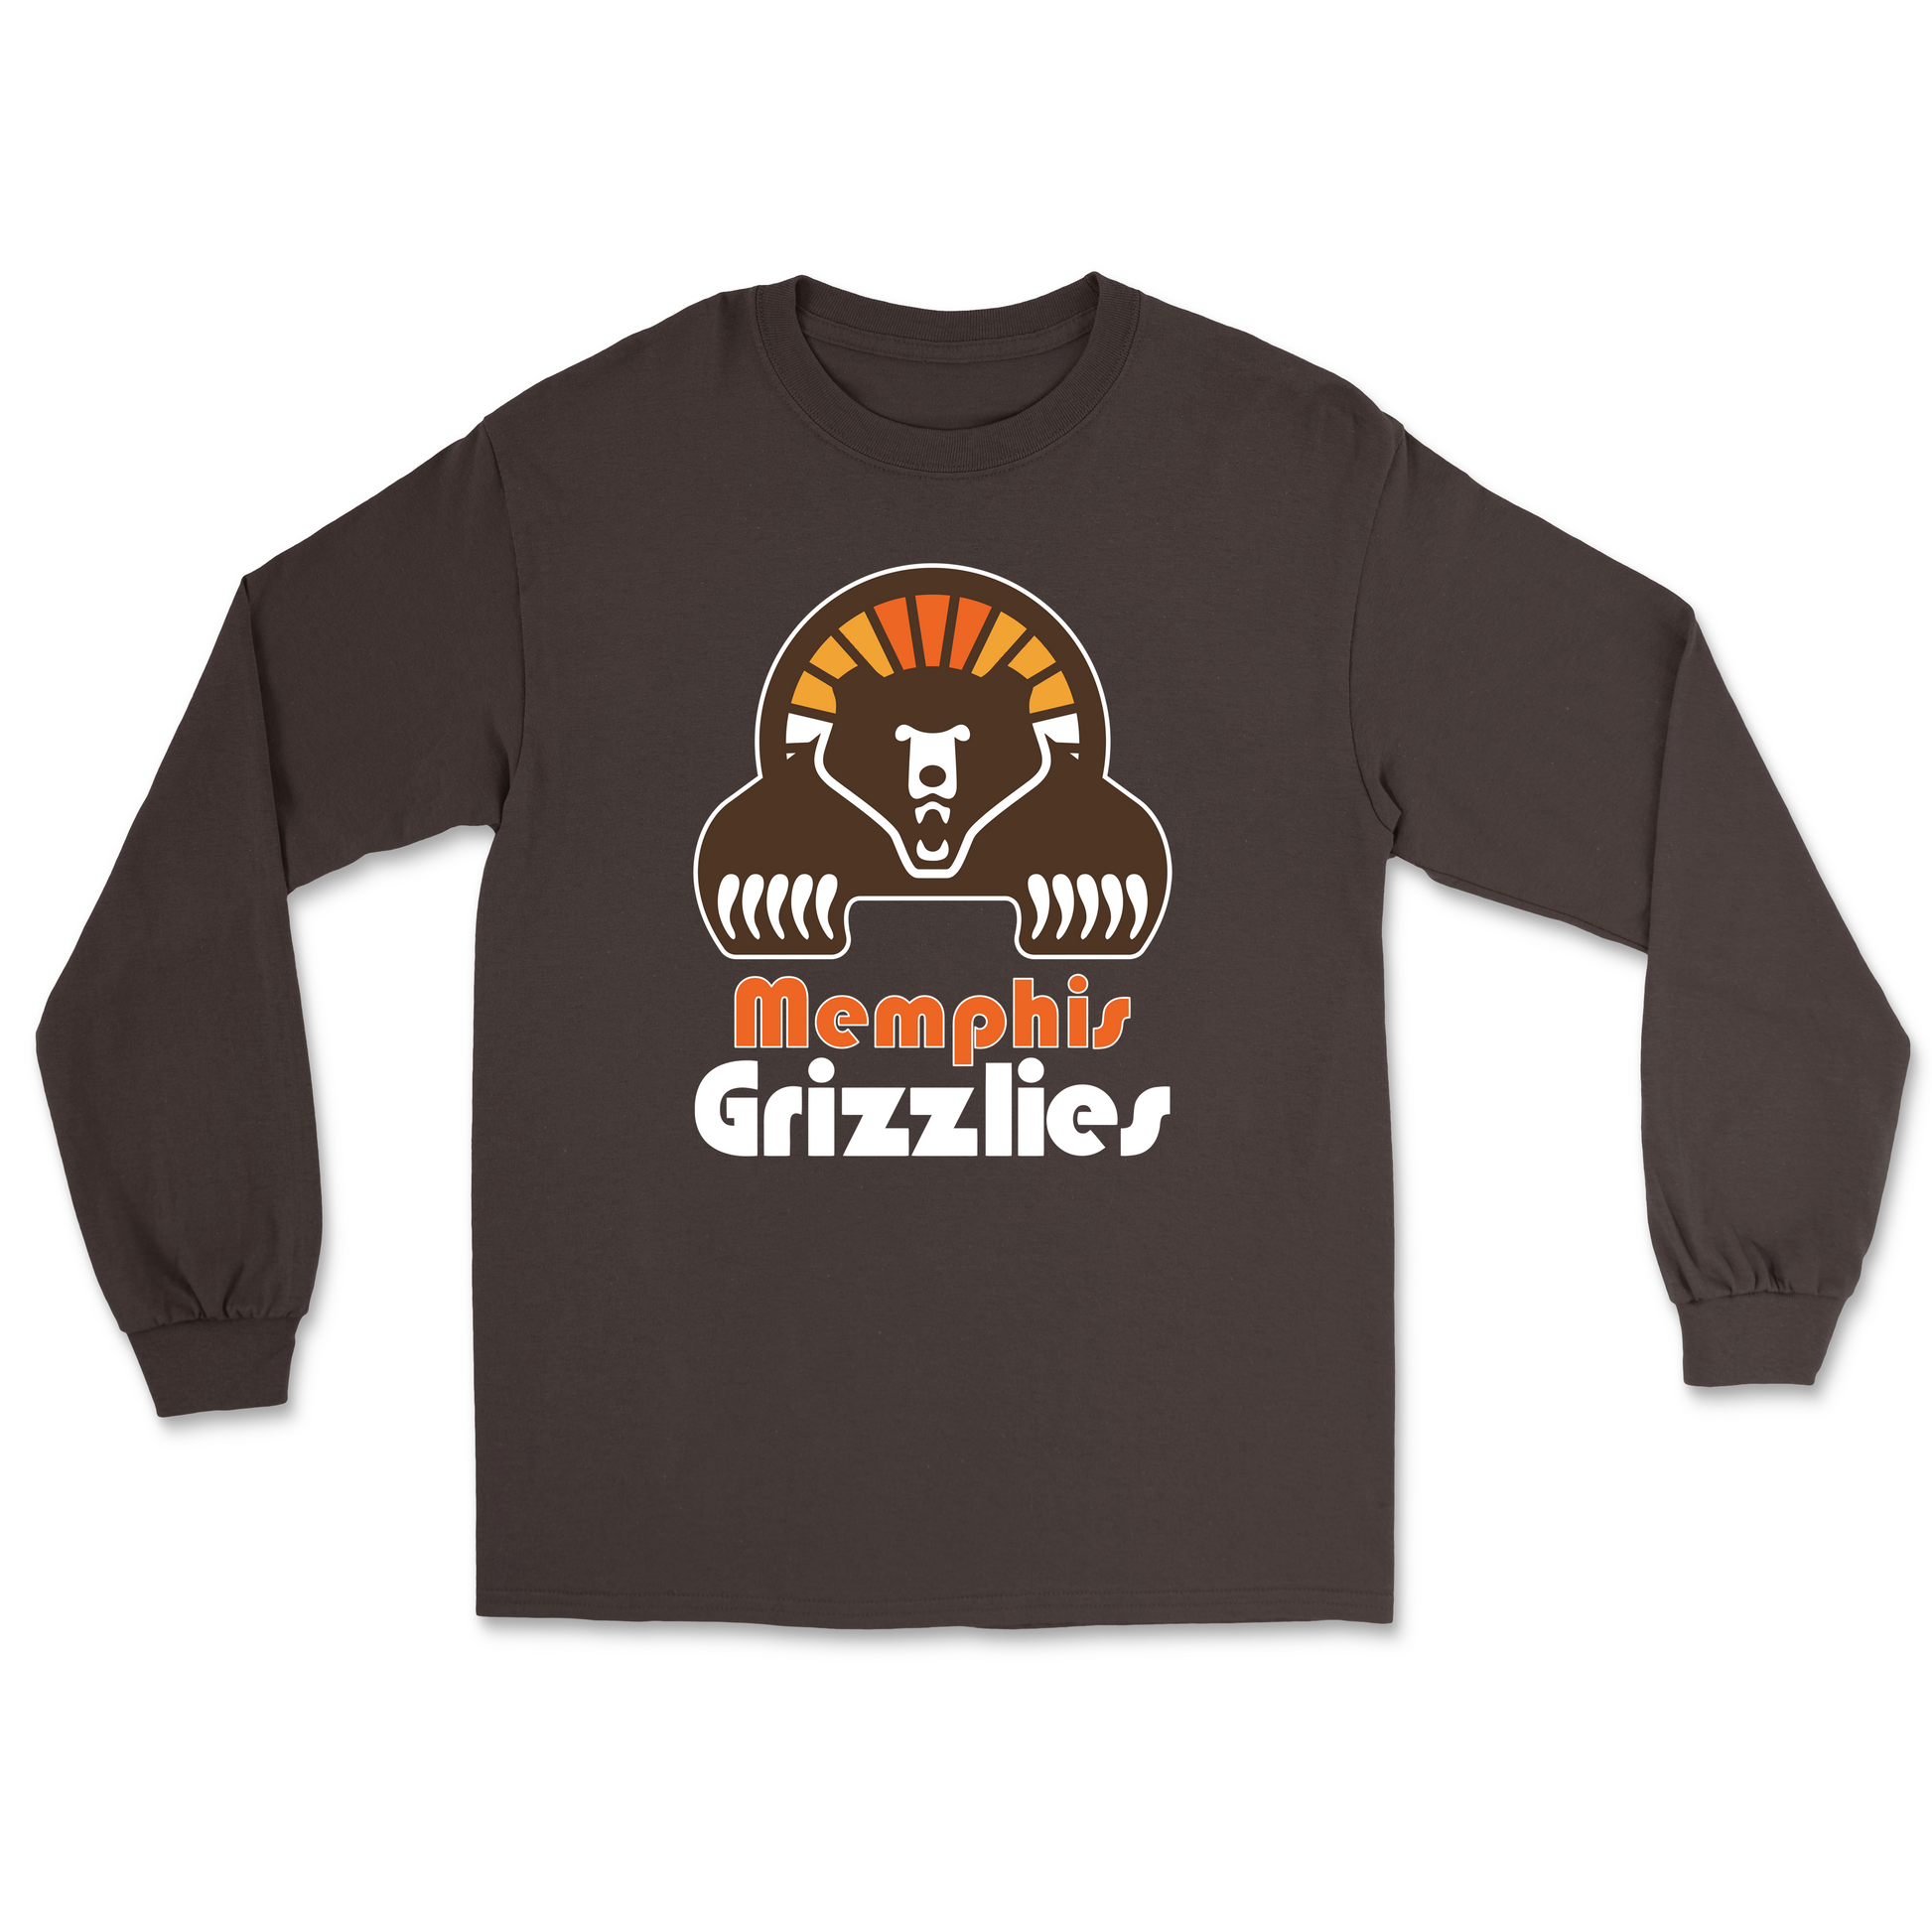 memphis grizzlies performance shirt